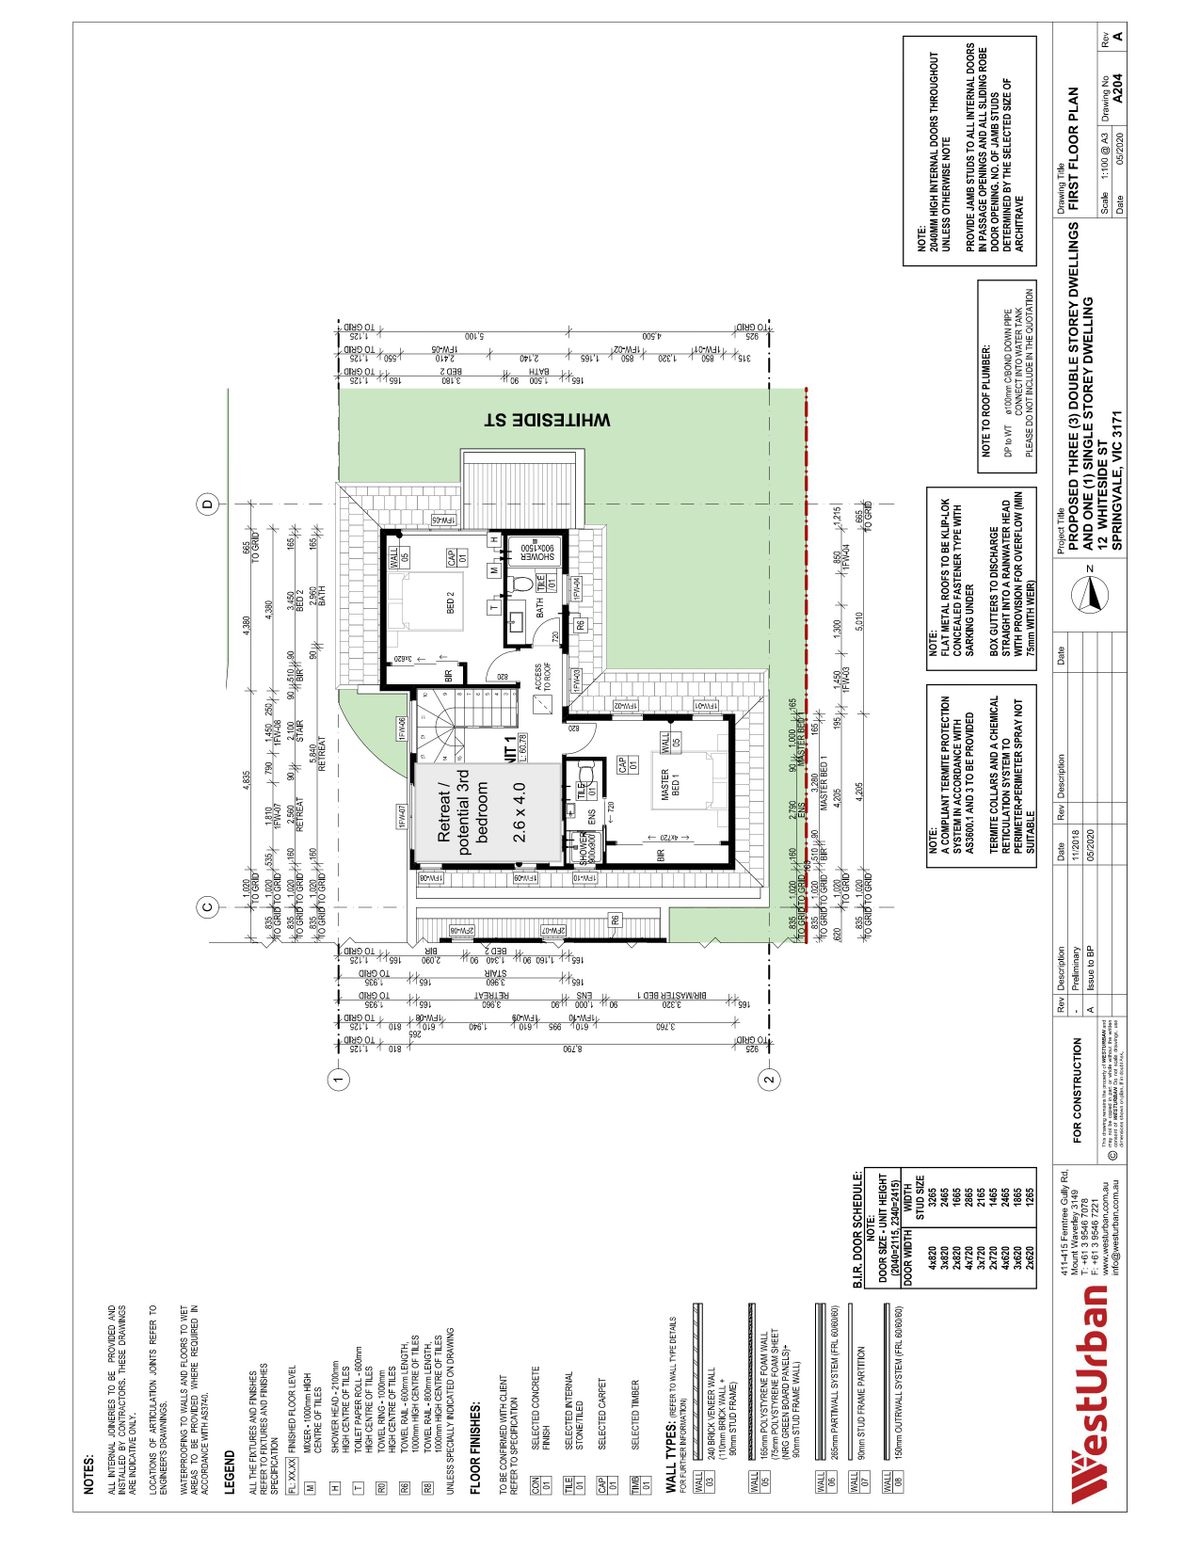 1 12 Whiteside Street Springvale potential floorplans   002